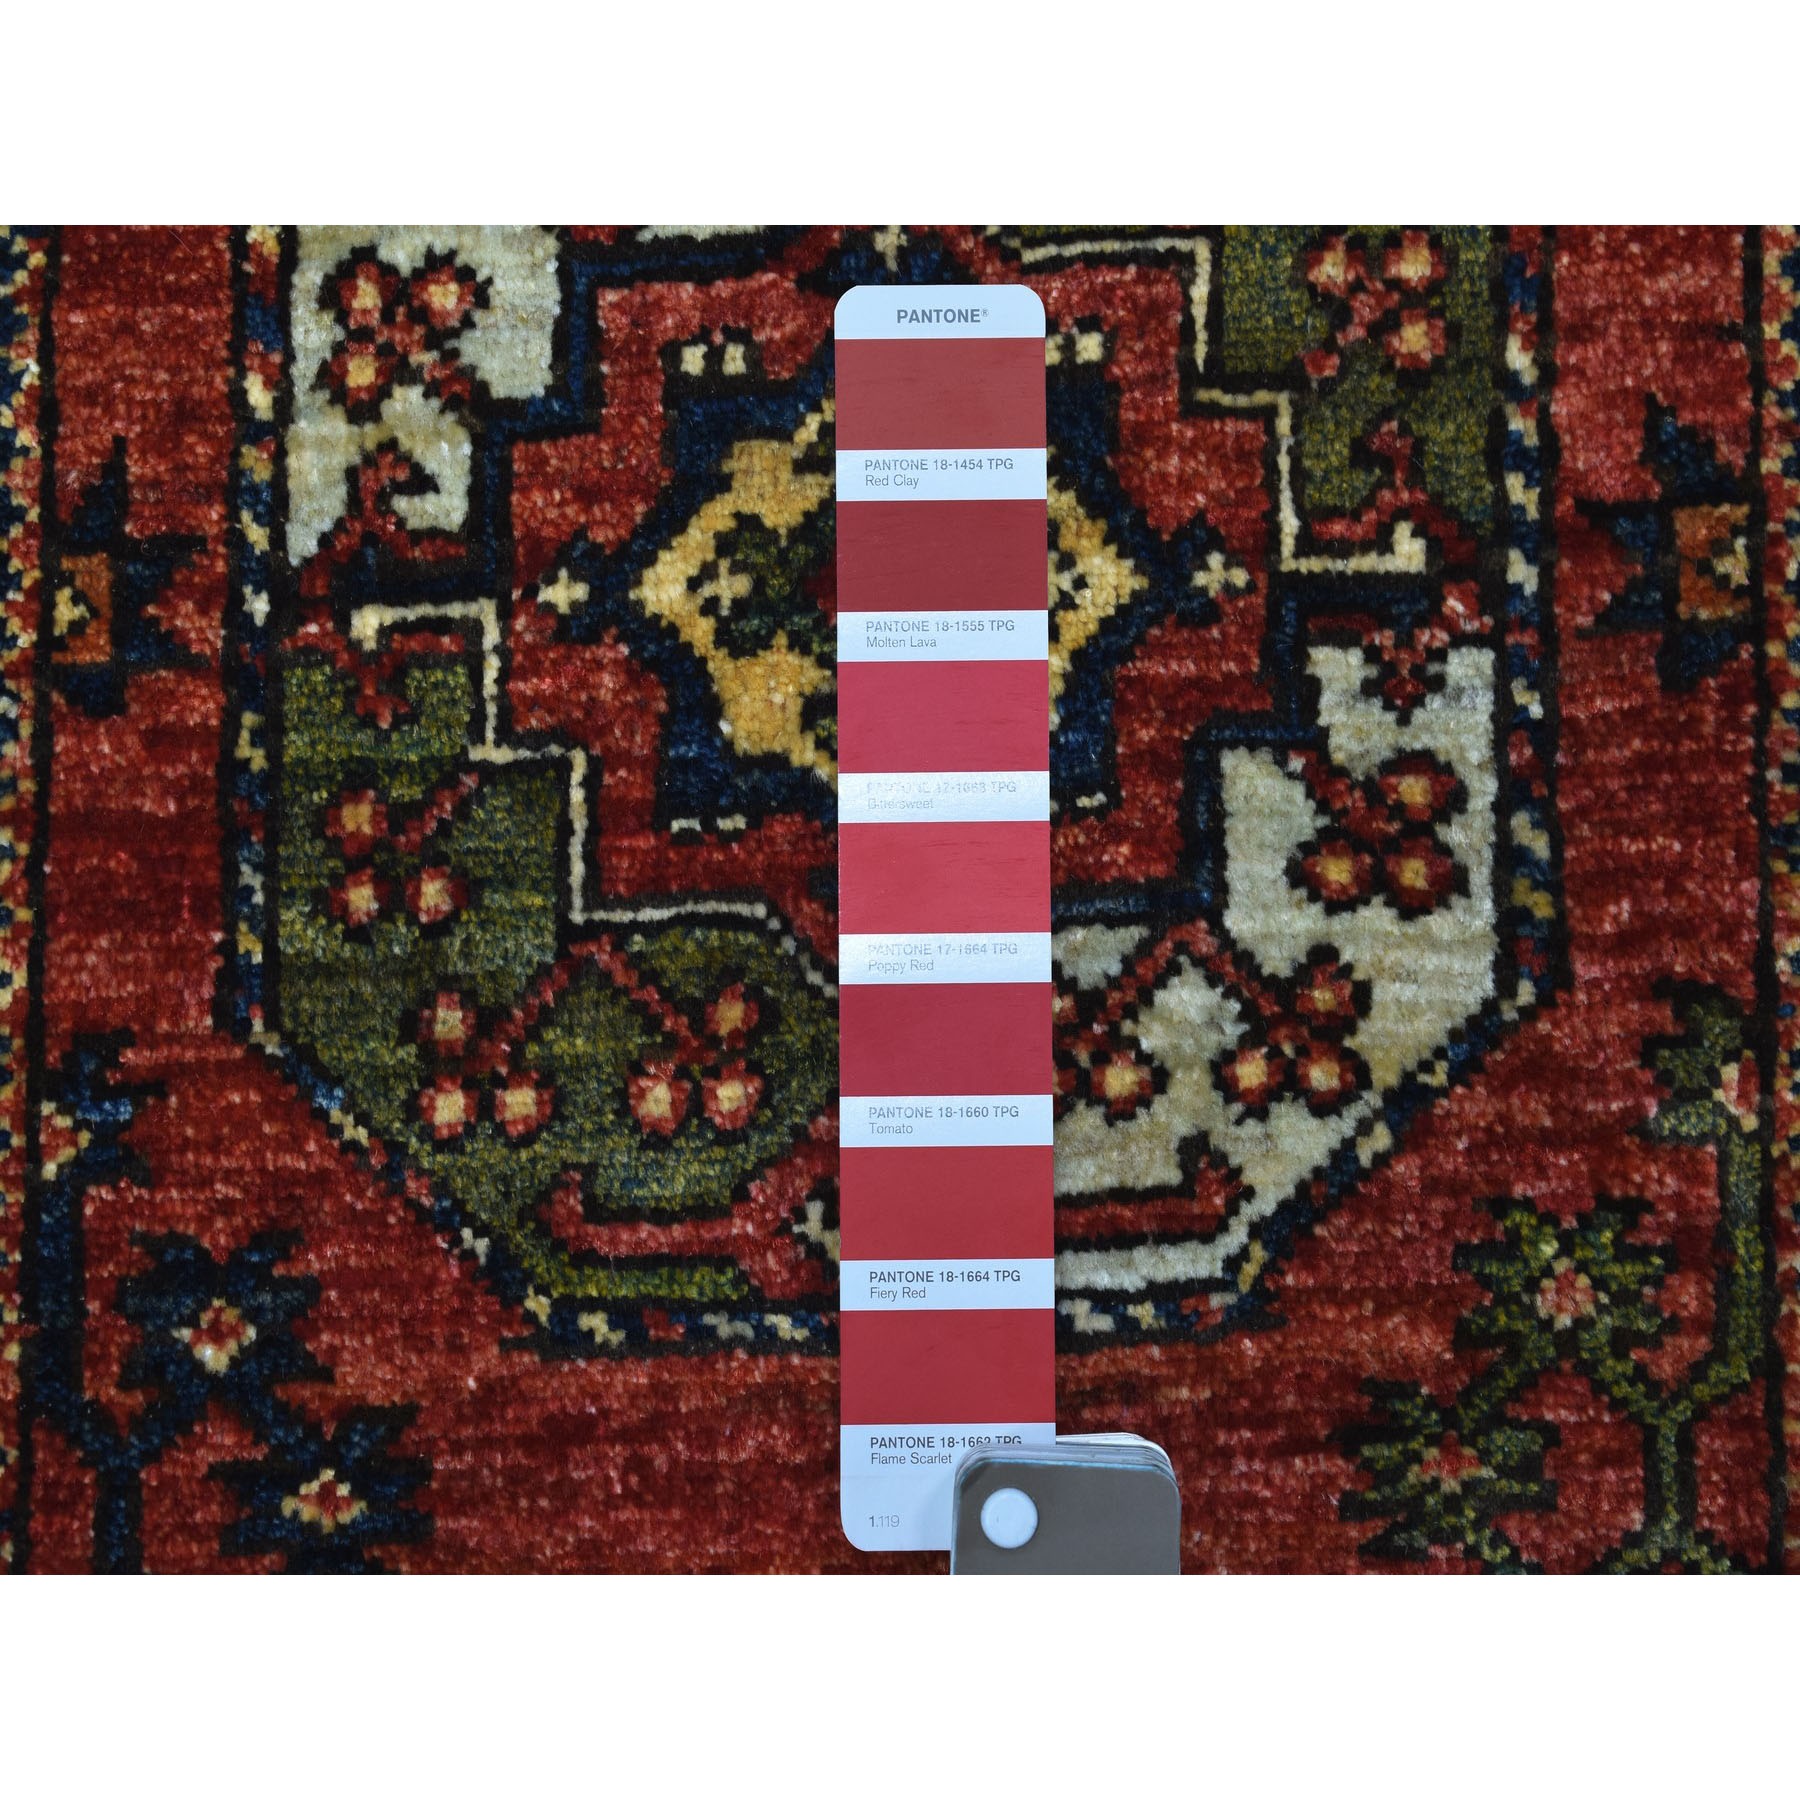 2'x3' Rust Red Afghan Turkoman Ersari Elephant Feet Design Organic Wool Hand Woven Oriental Rug 